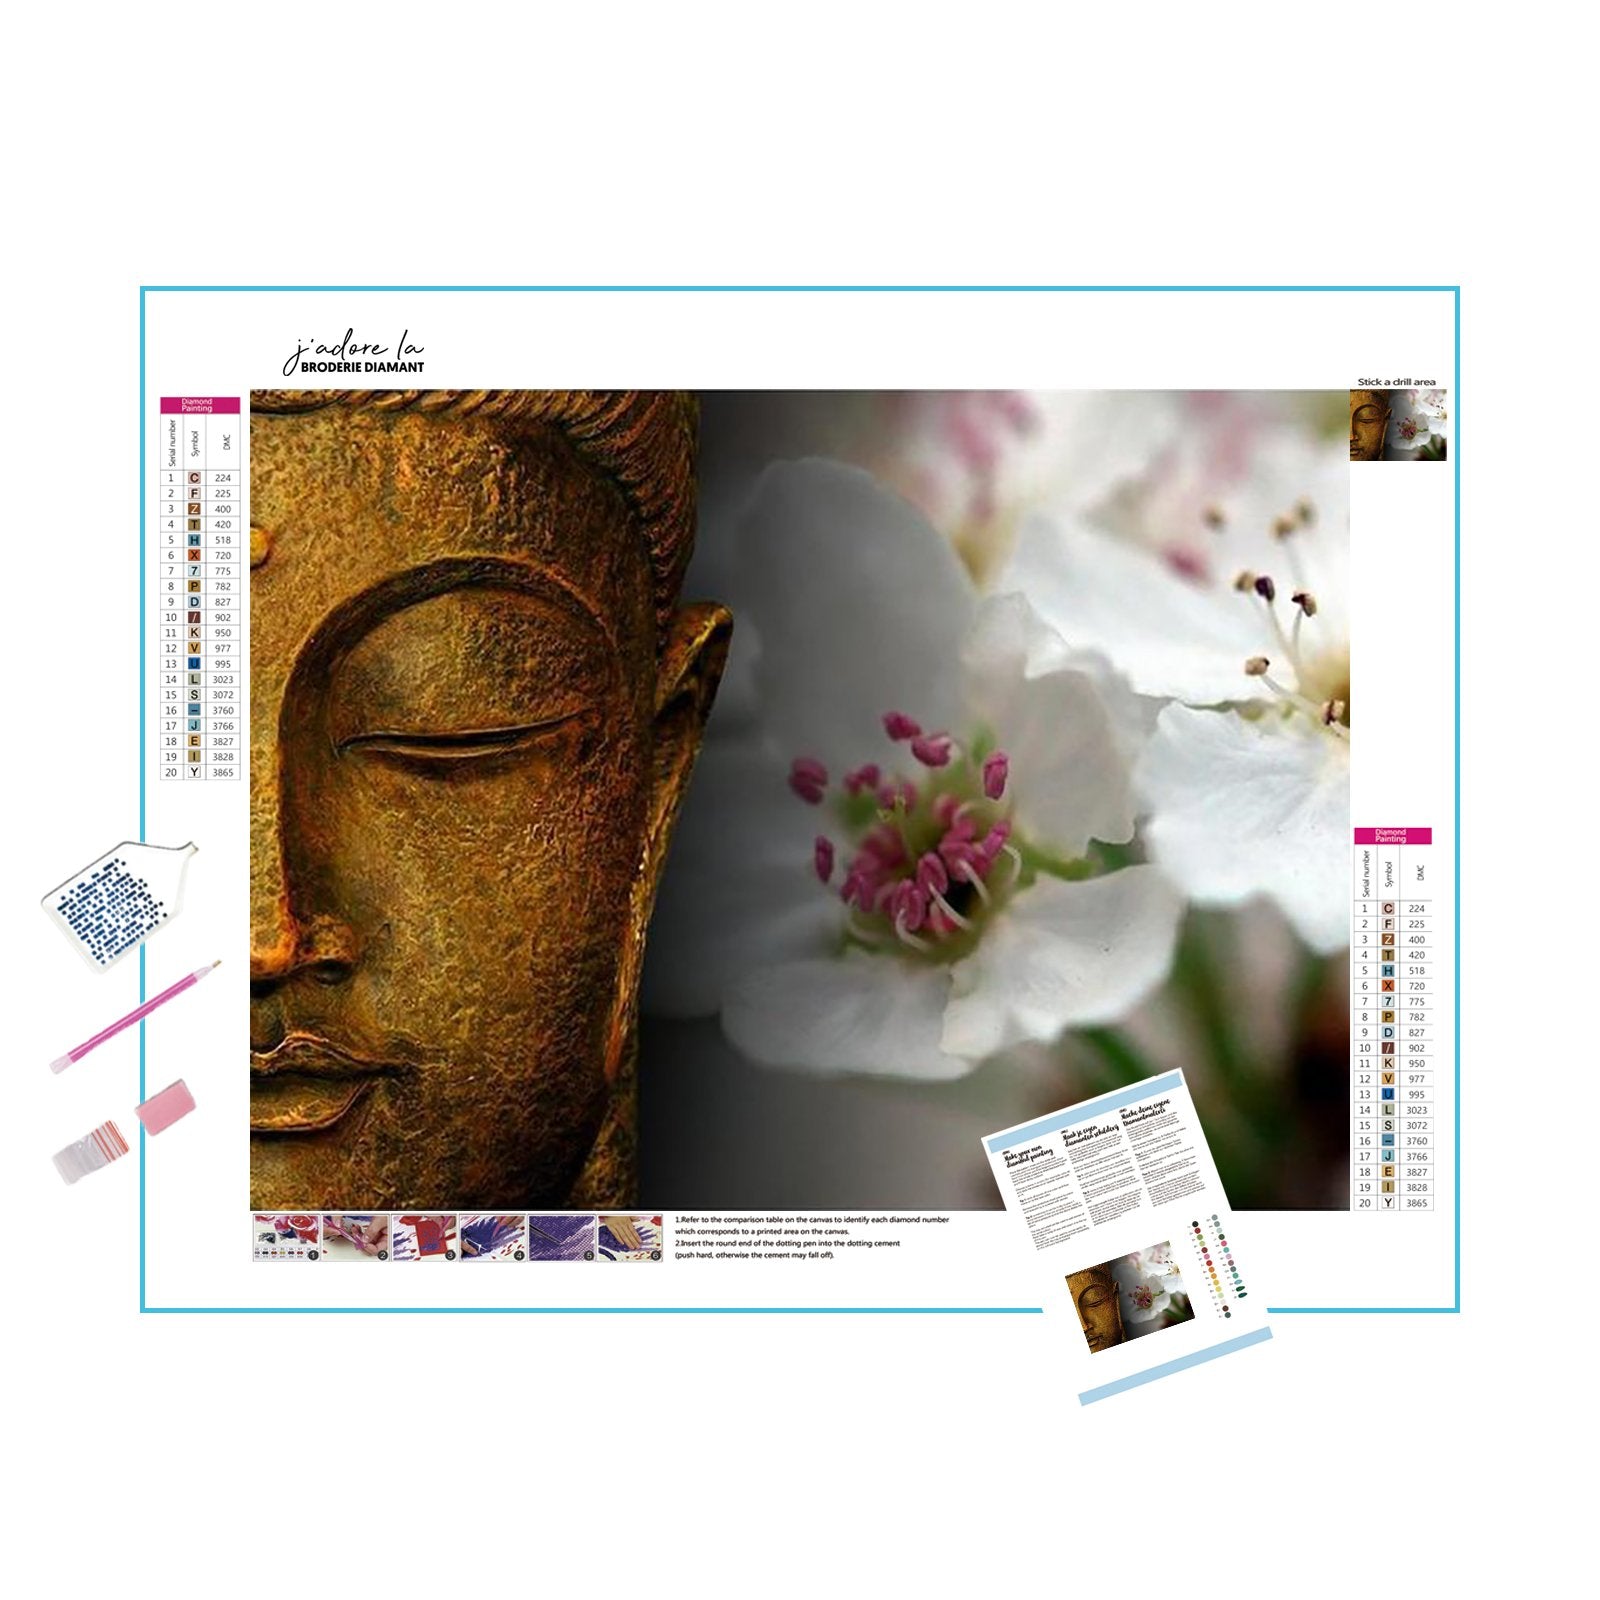 Buddha surrounded by white flowers, symbolizing purity and spiritual awakening.Buddha With White Flowers - Diamondartlove